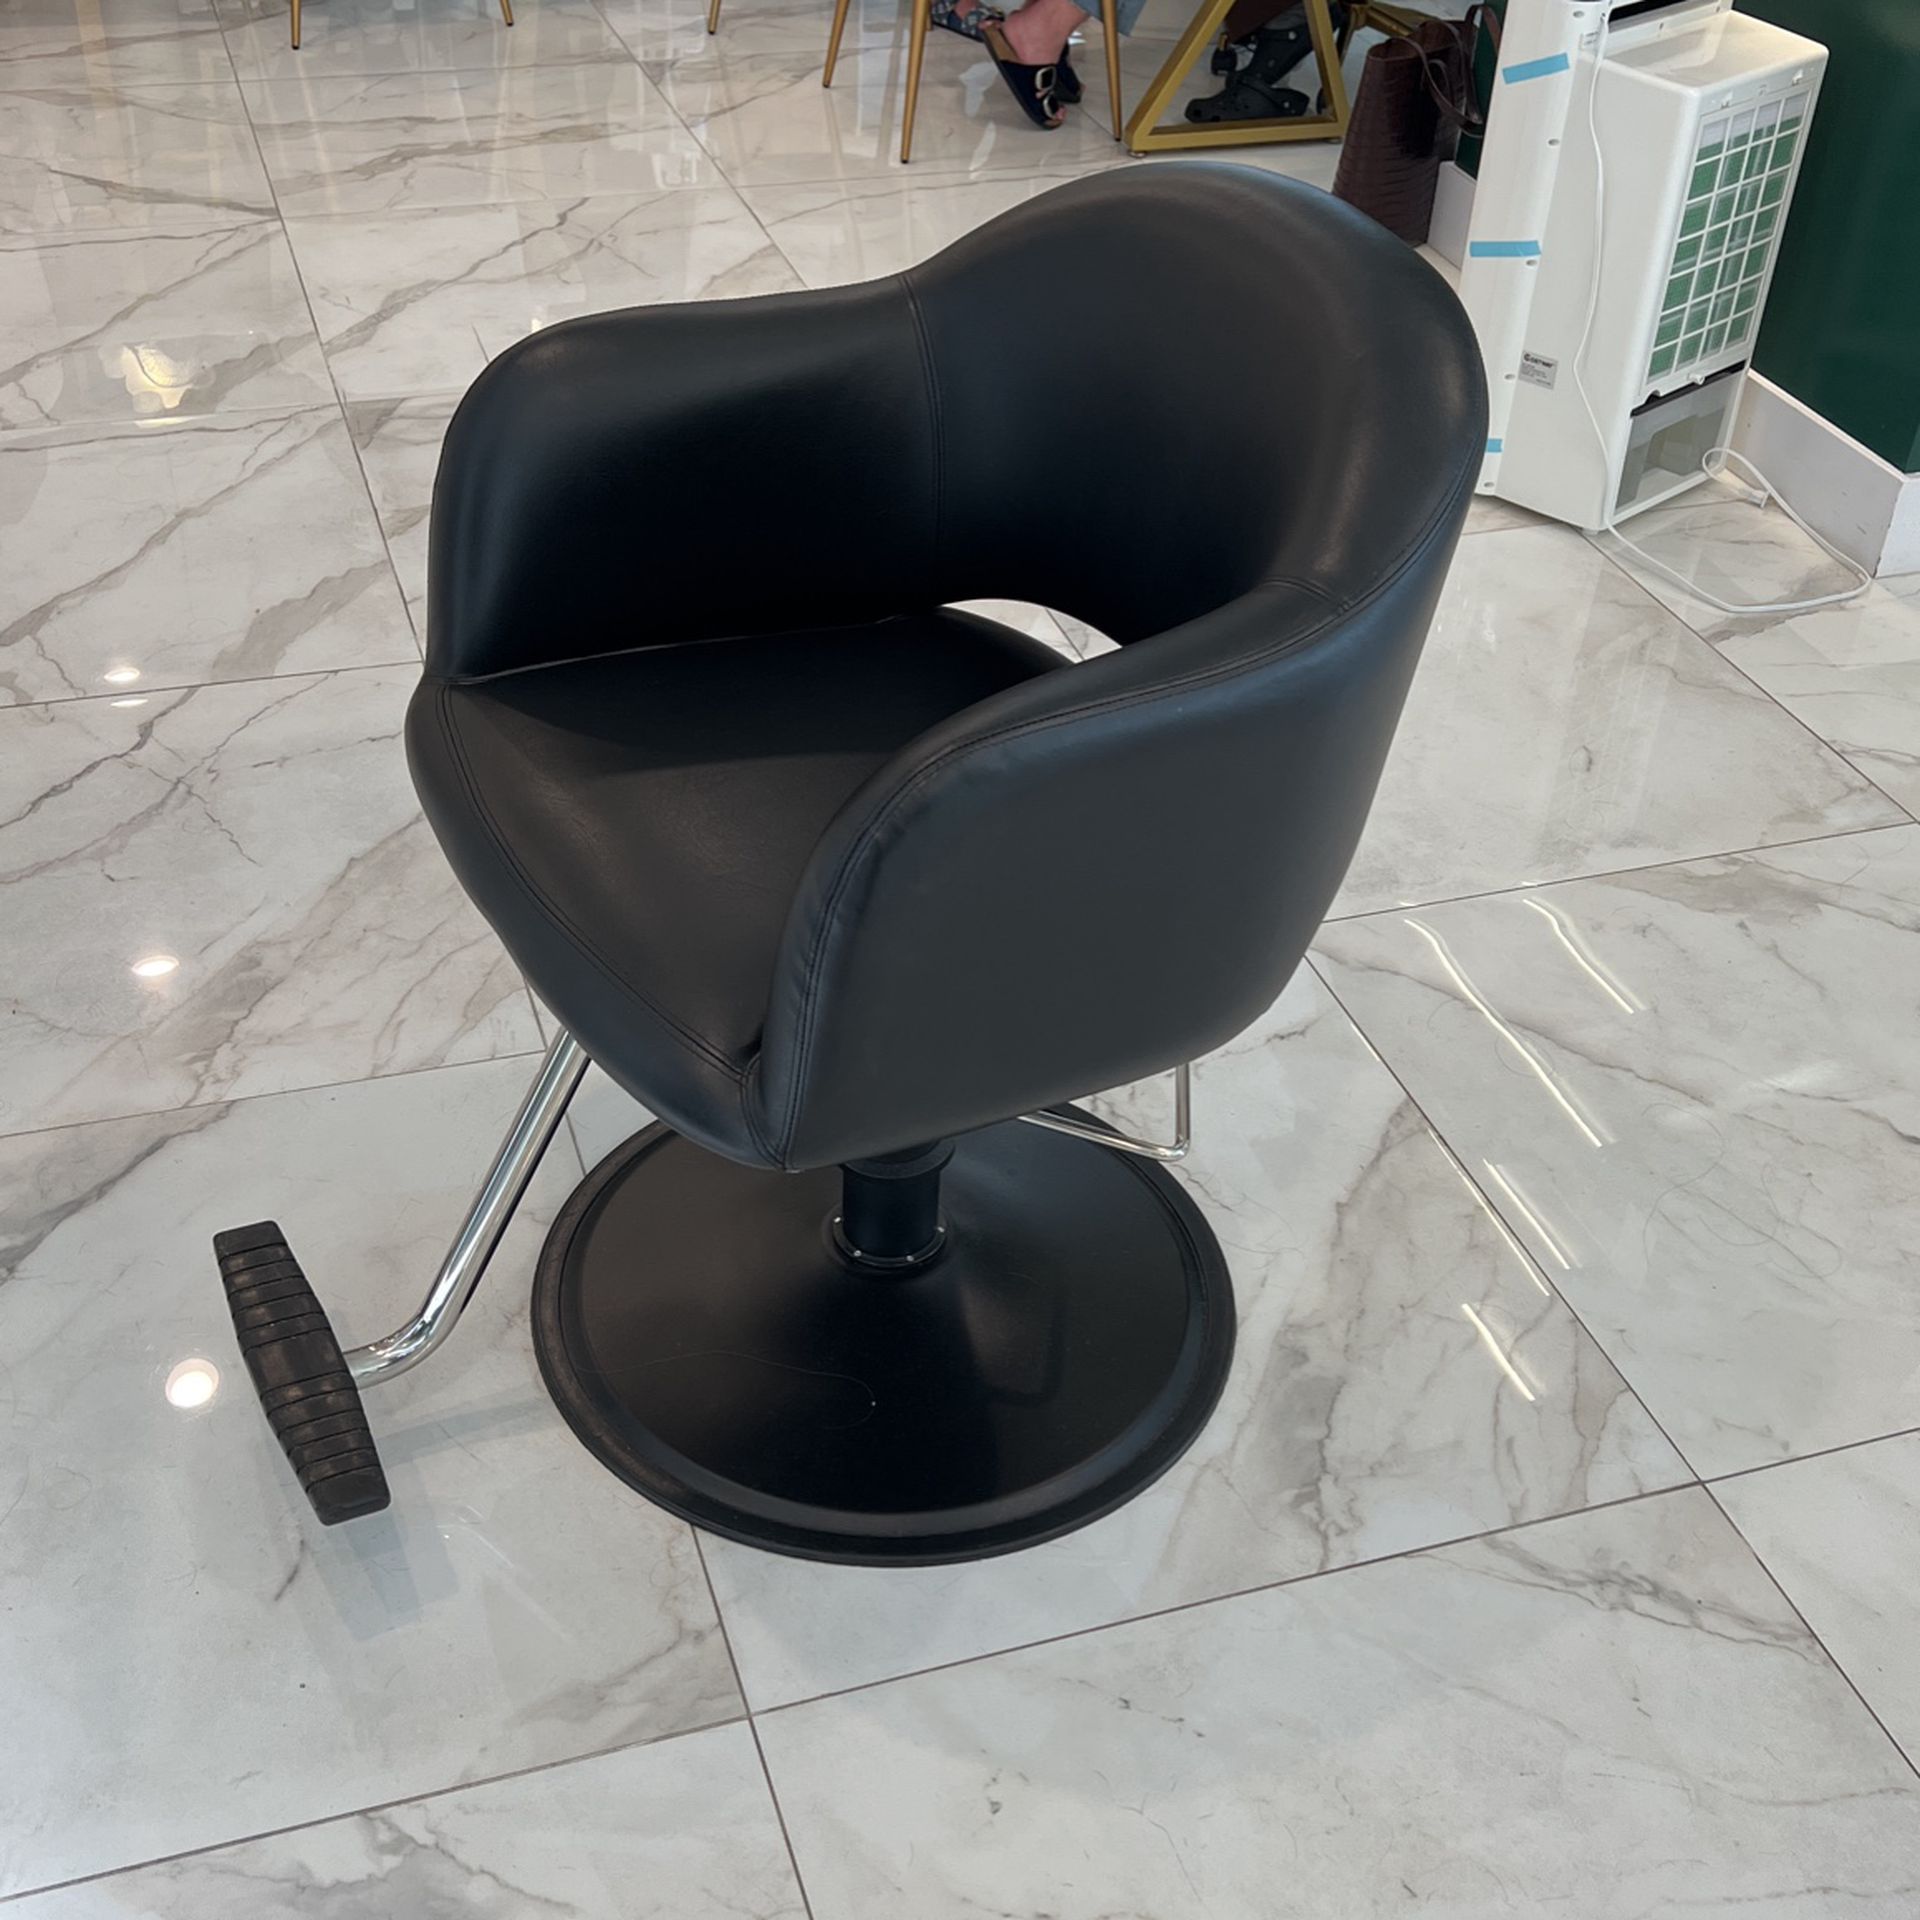 Hair salon chairs(2 for sale) 